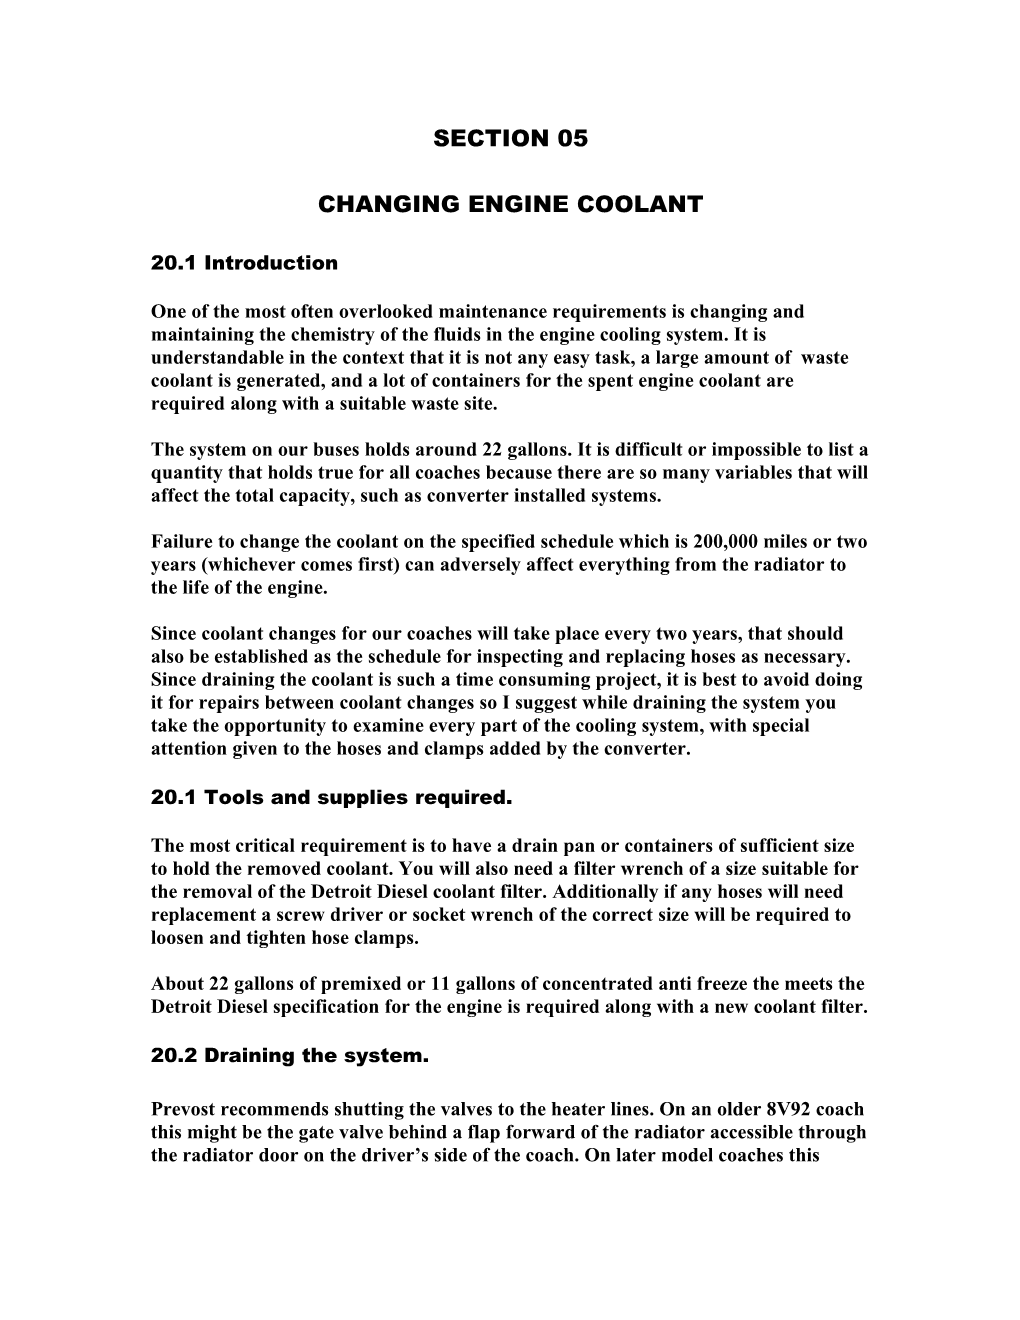 Changing Engine Coolant